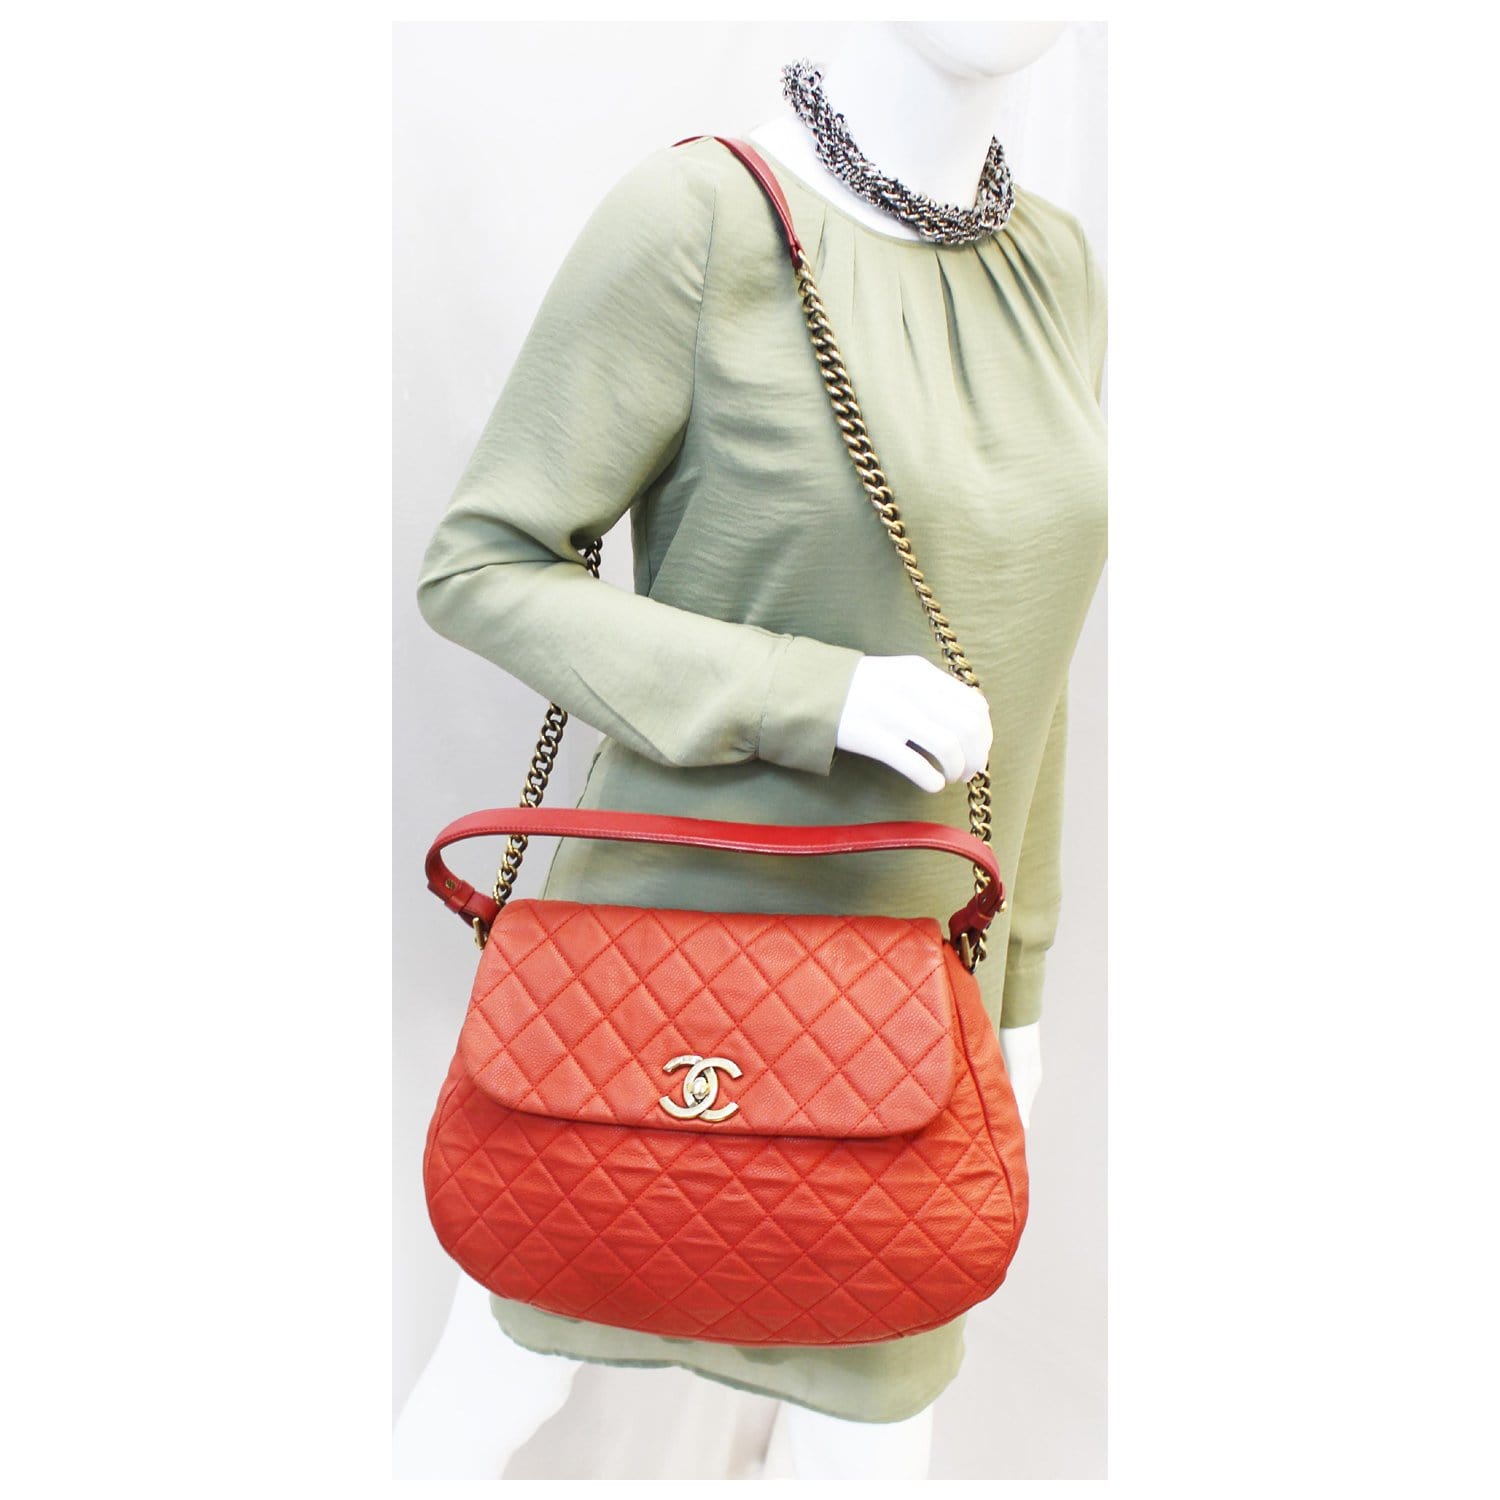 Chanel Smooth Leather Handbags